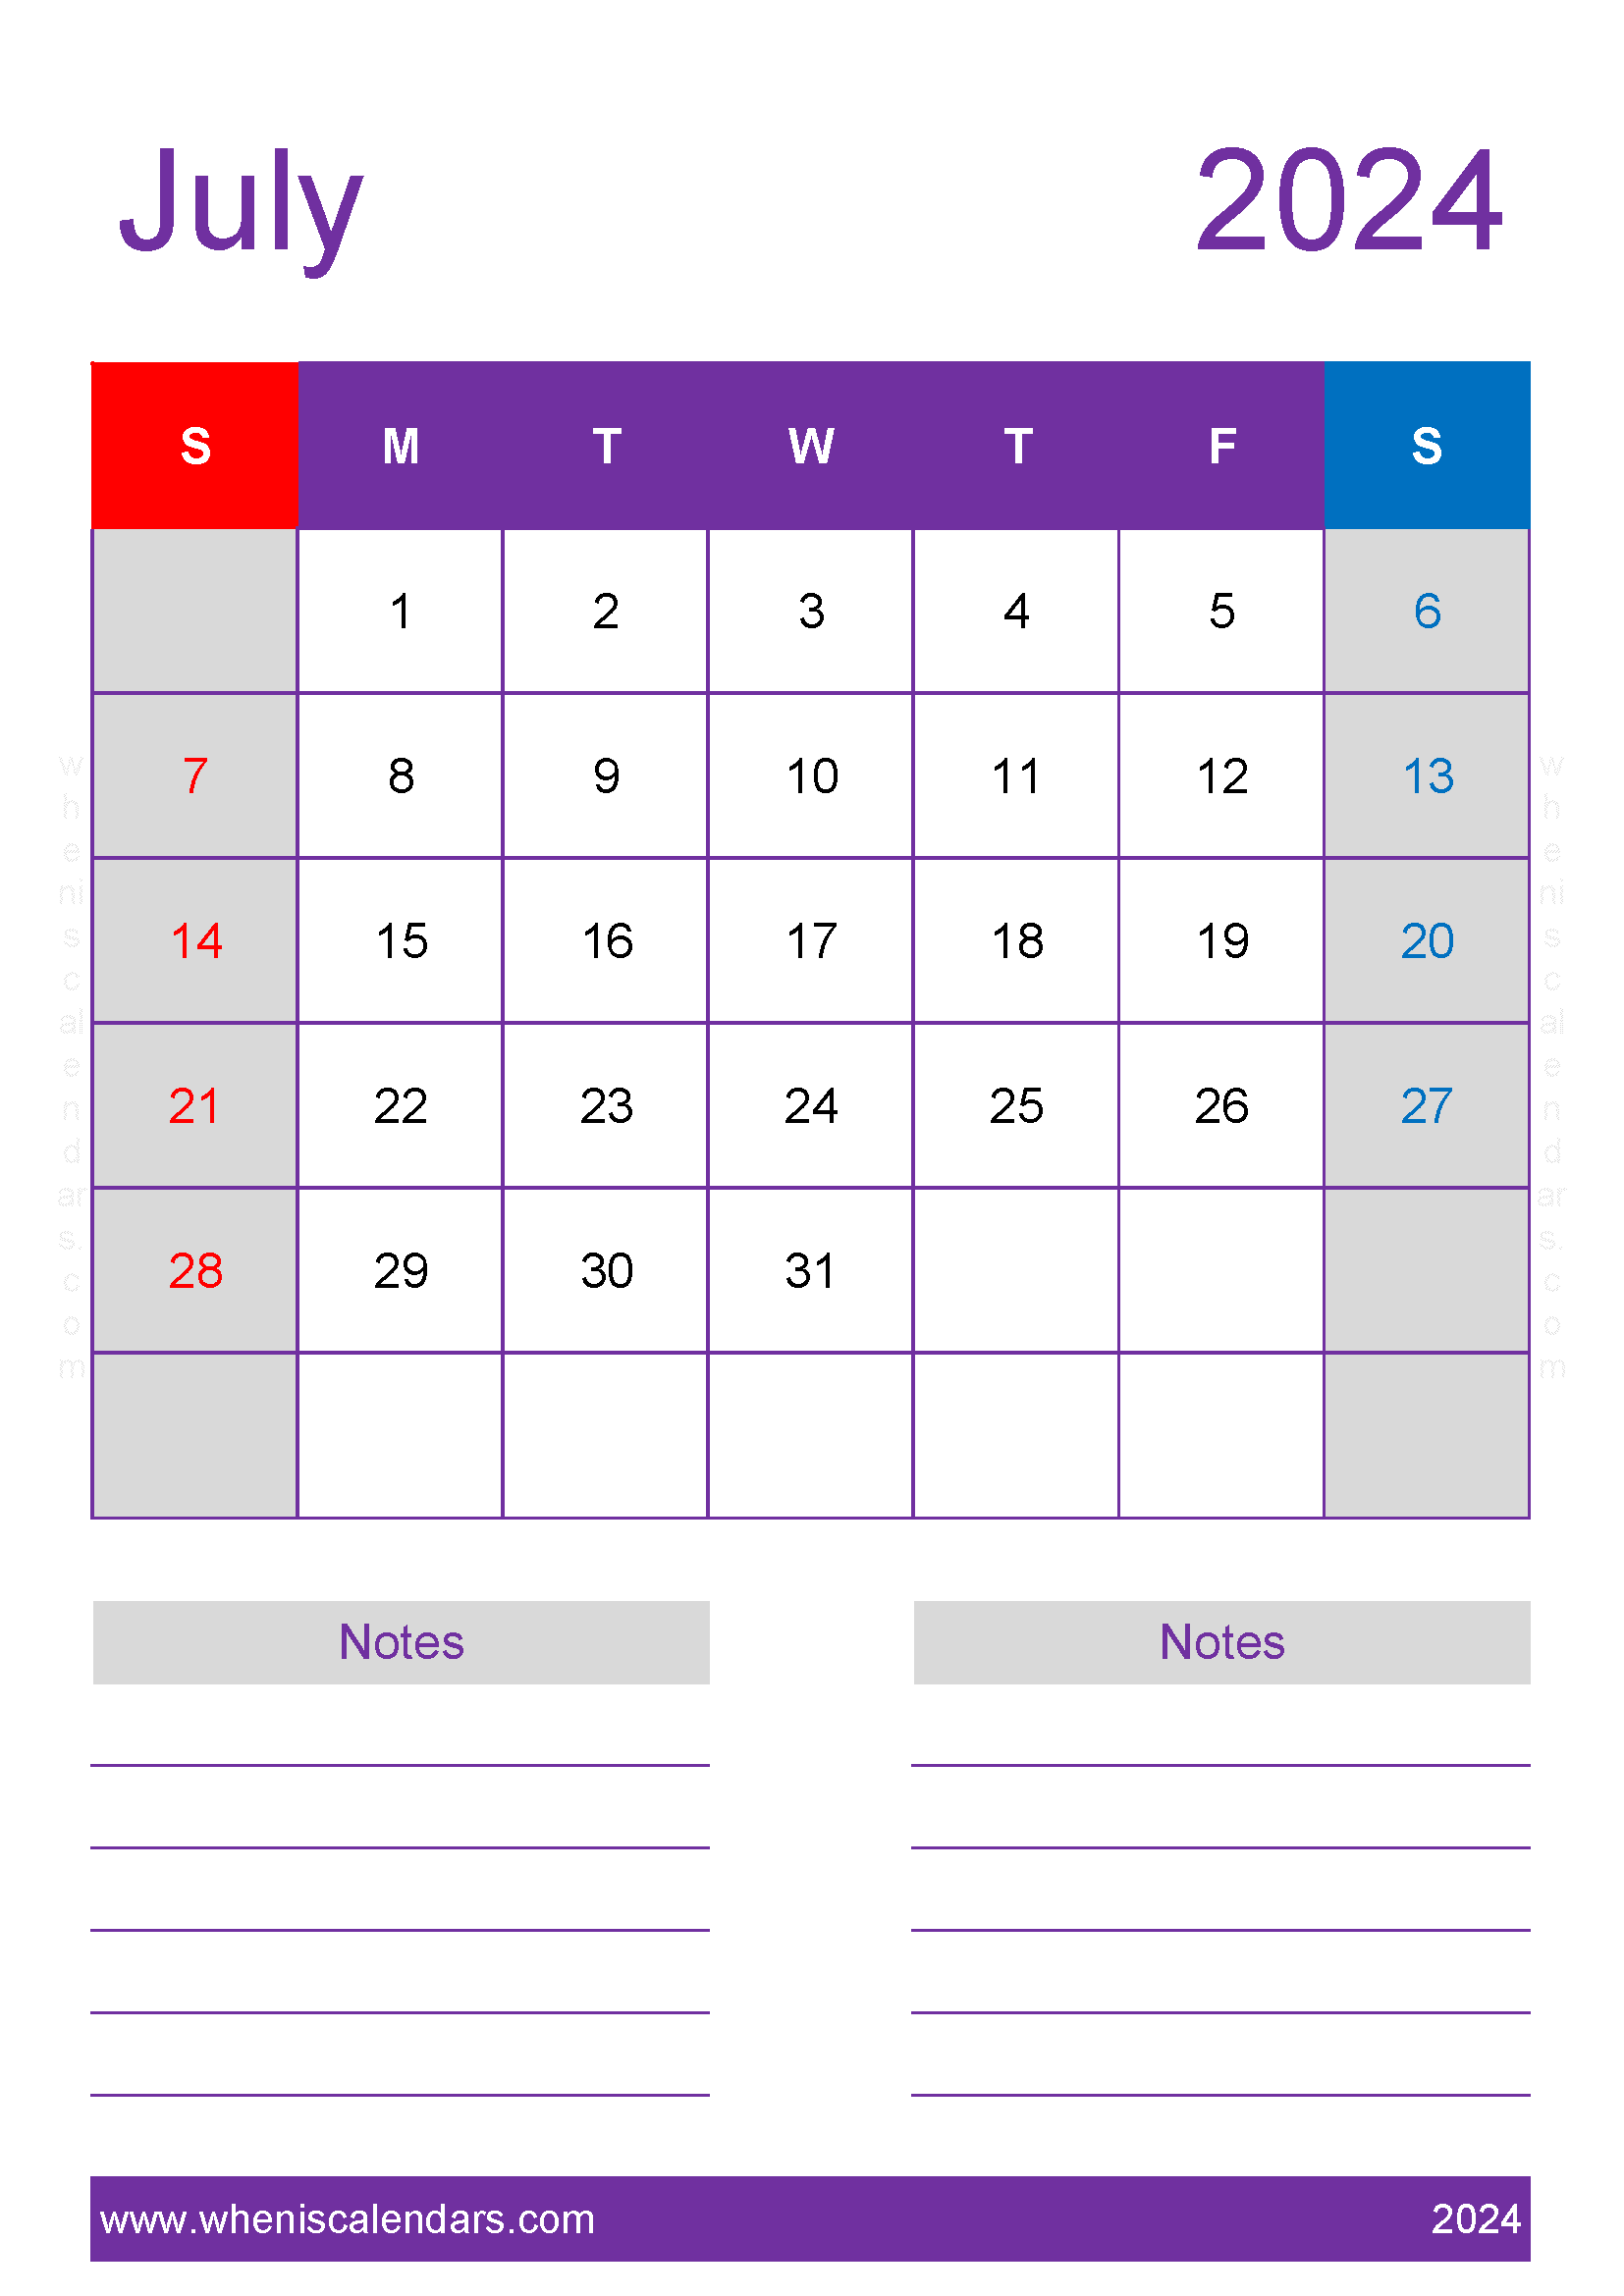 July 2024 Calendar large print Monthly Calendar